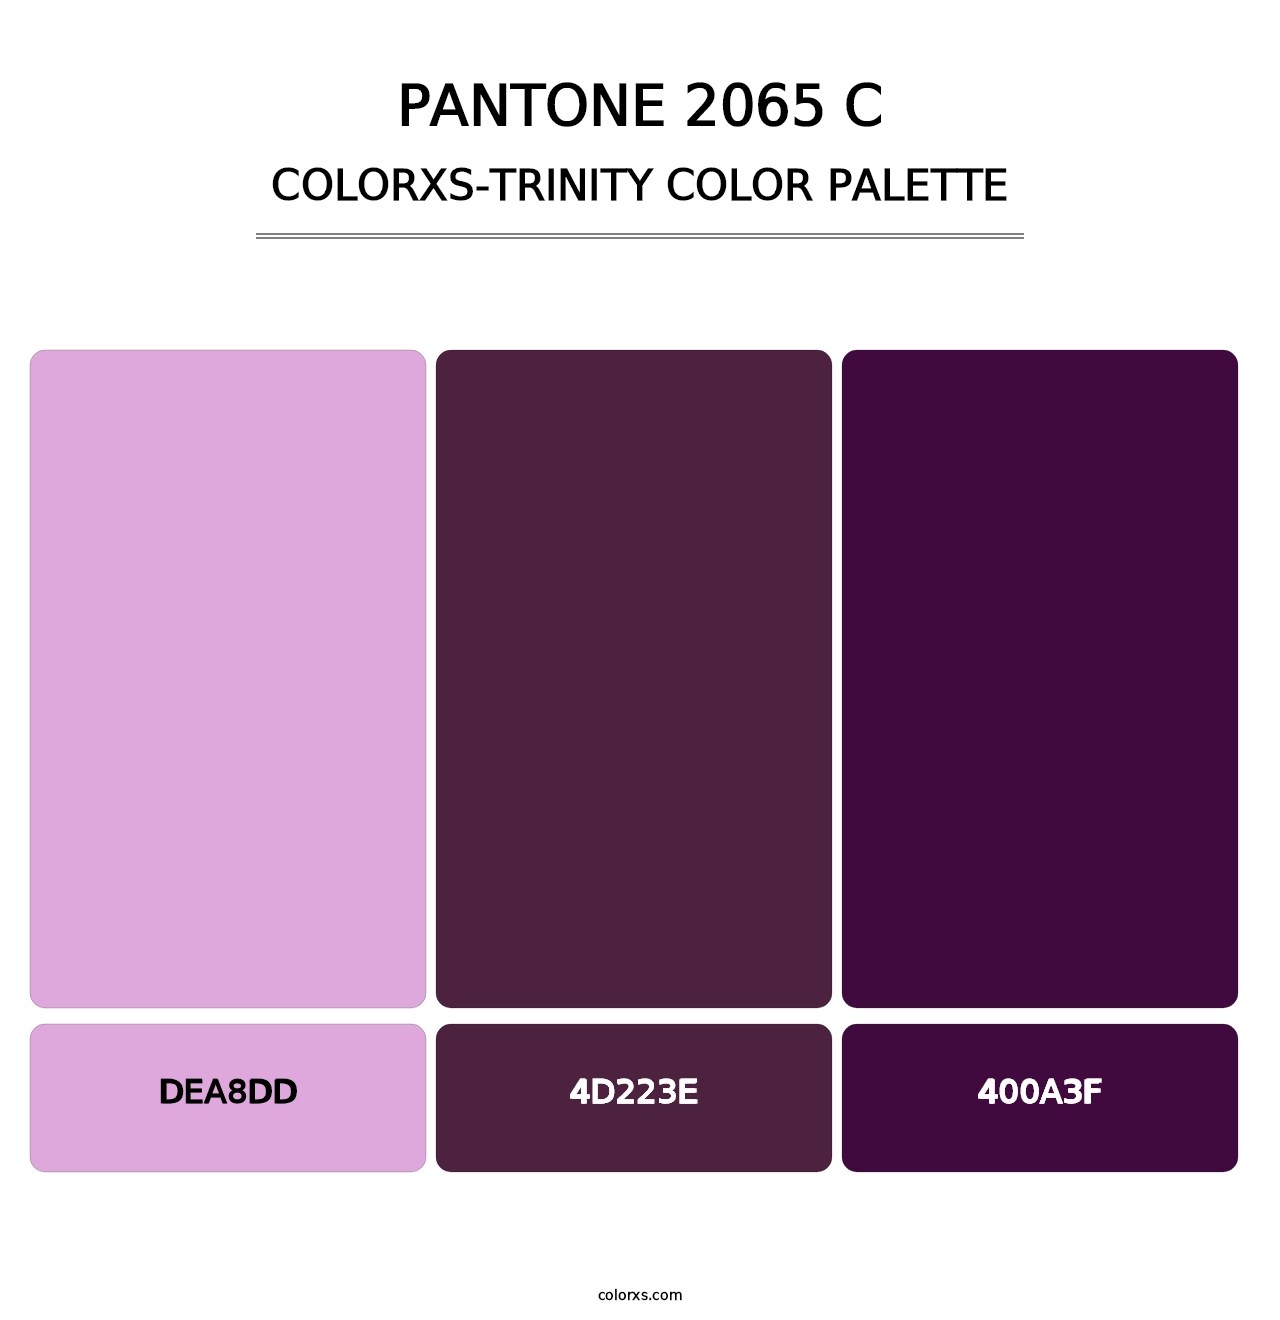 PANTONE 2065 C - Colorxs Trinity Palette